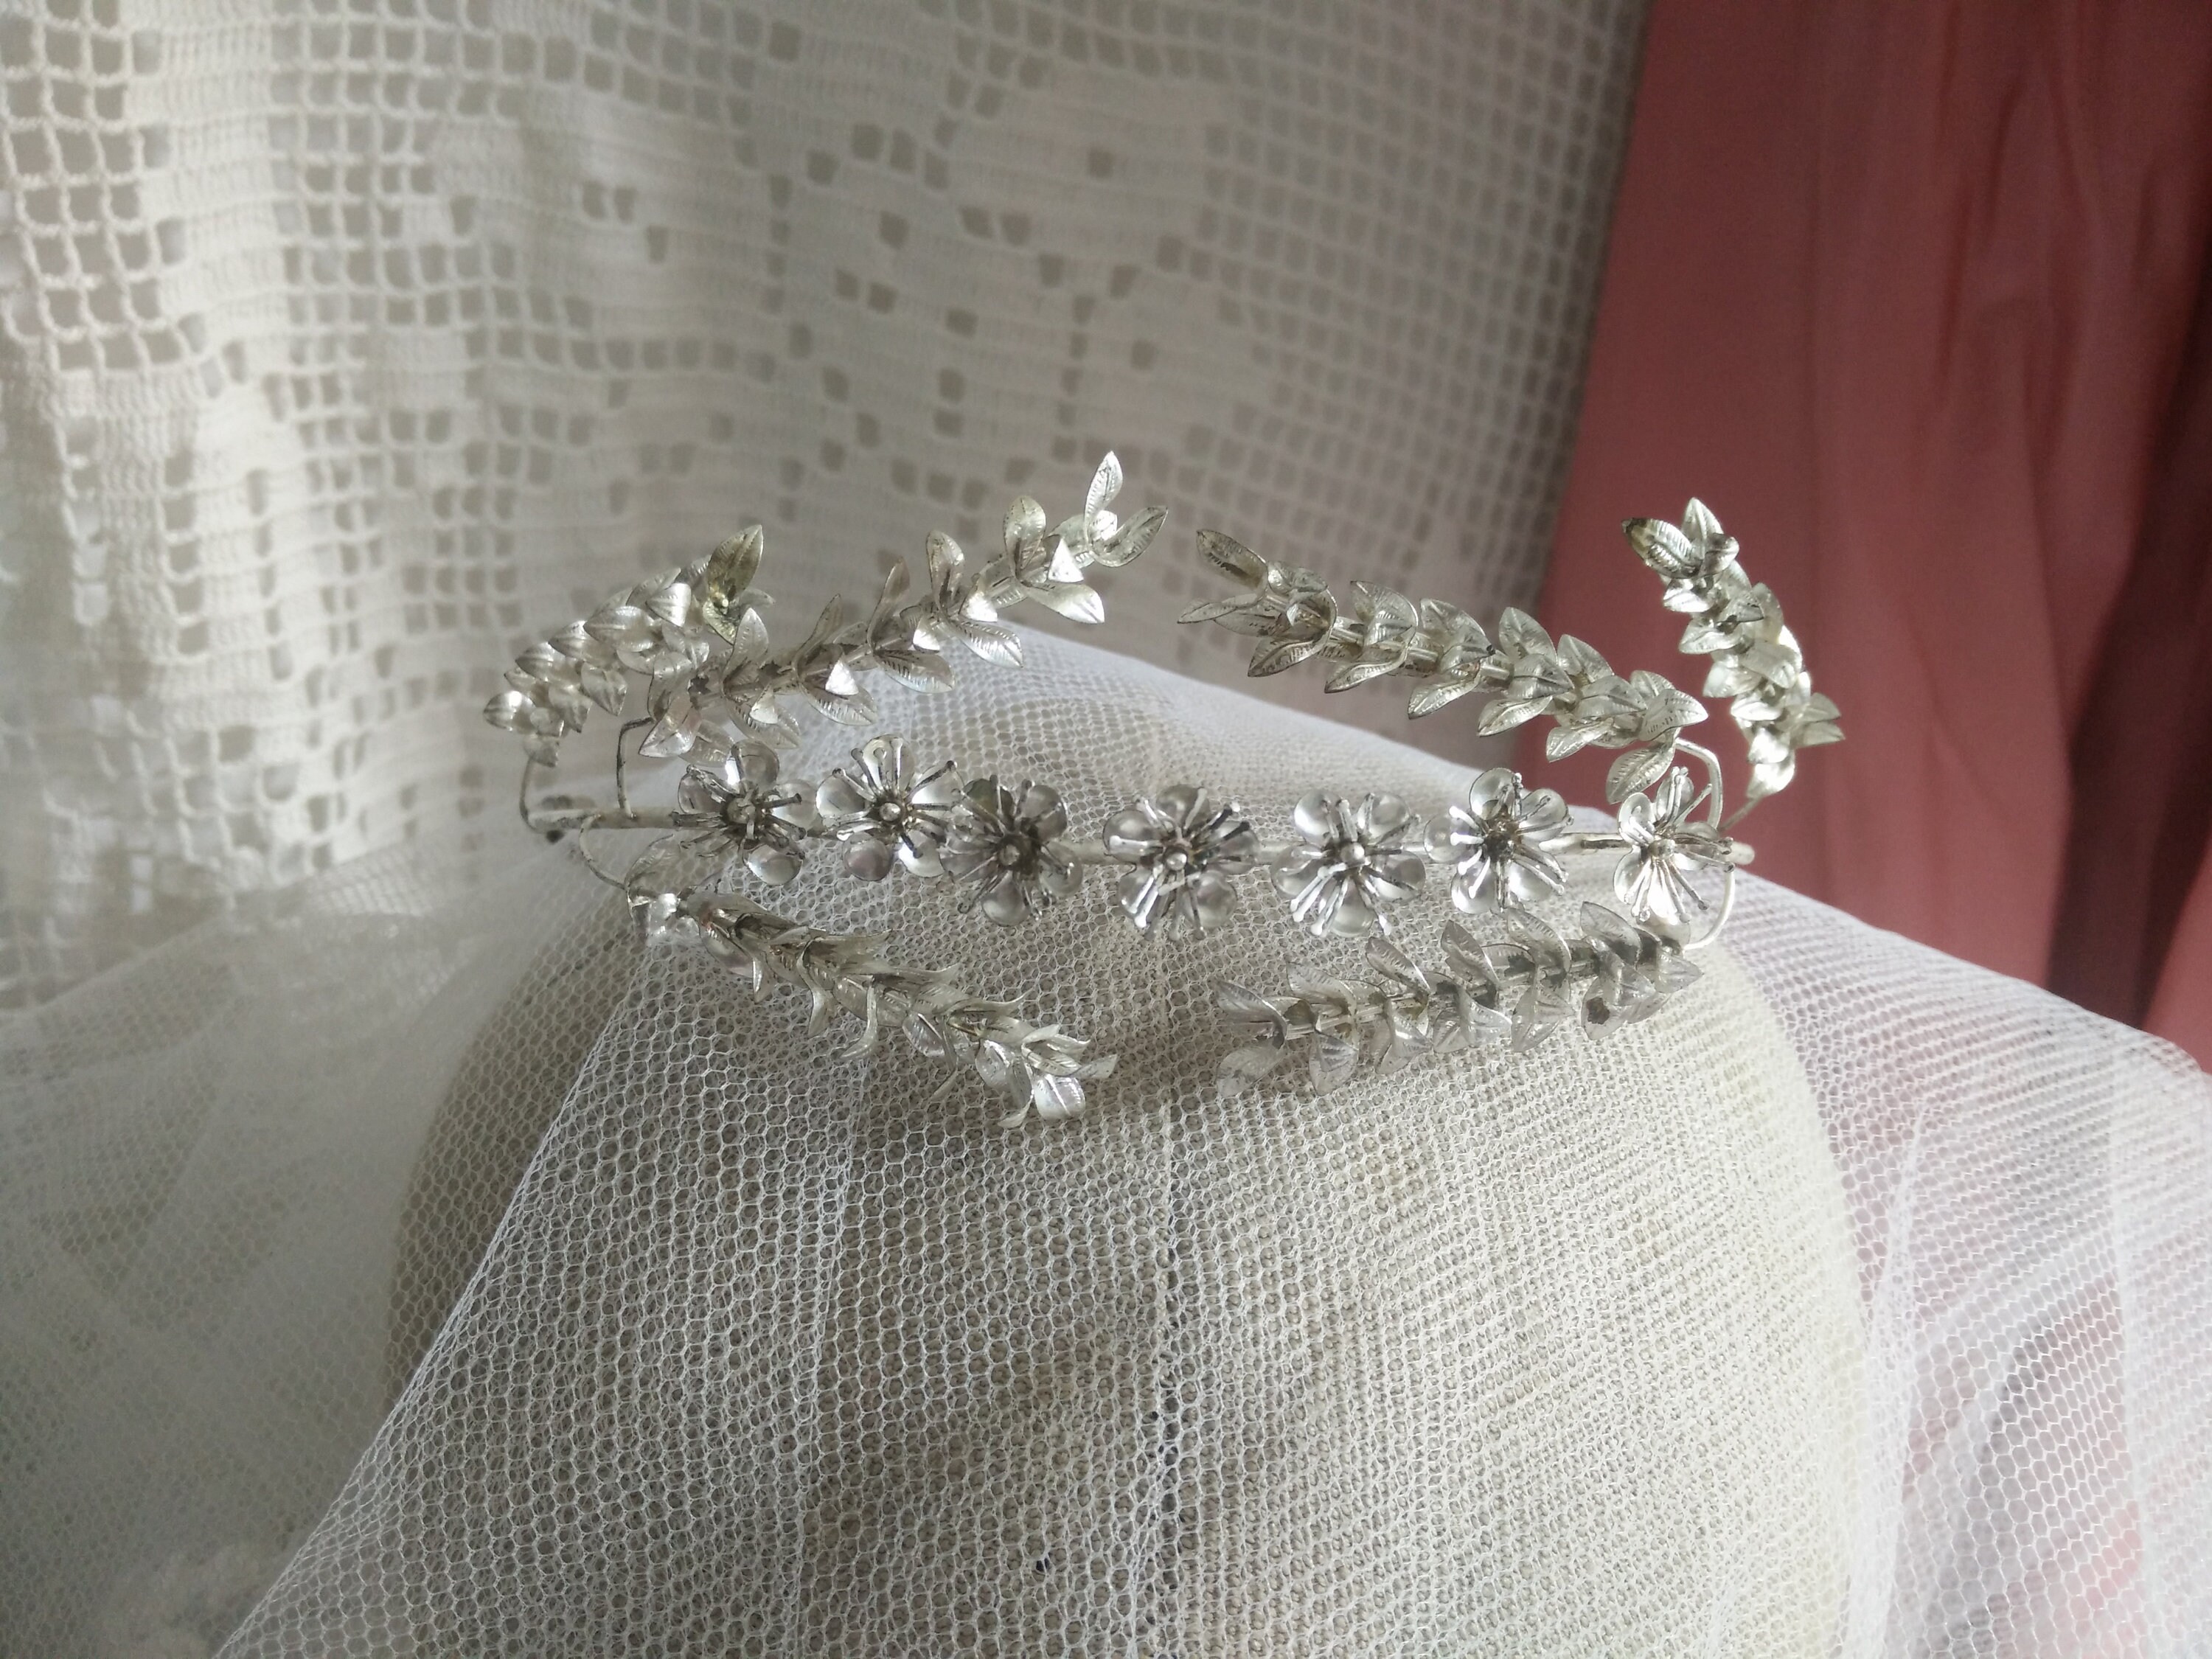 tiara nupcial tiara de mirto Bodas Accesorios Accesorios para el cabello Coronas y tiaras aniversario de bodas corsage tiara de boda vintage Corona de mirto de plata alemana 